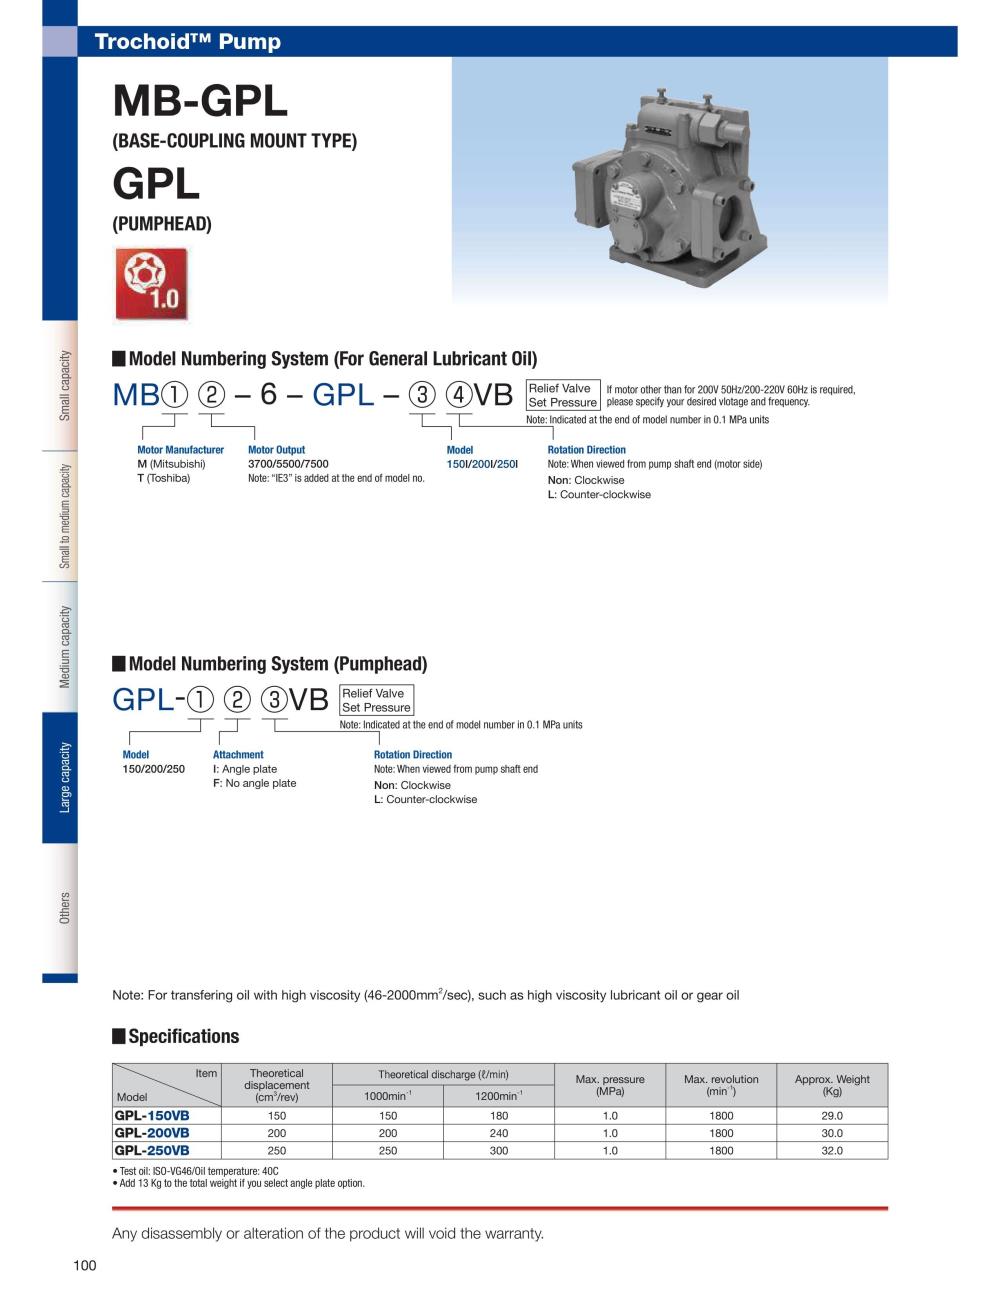 NOP Oil Pump TOP-GPL-IVB Series